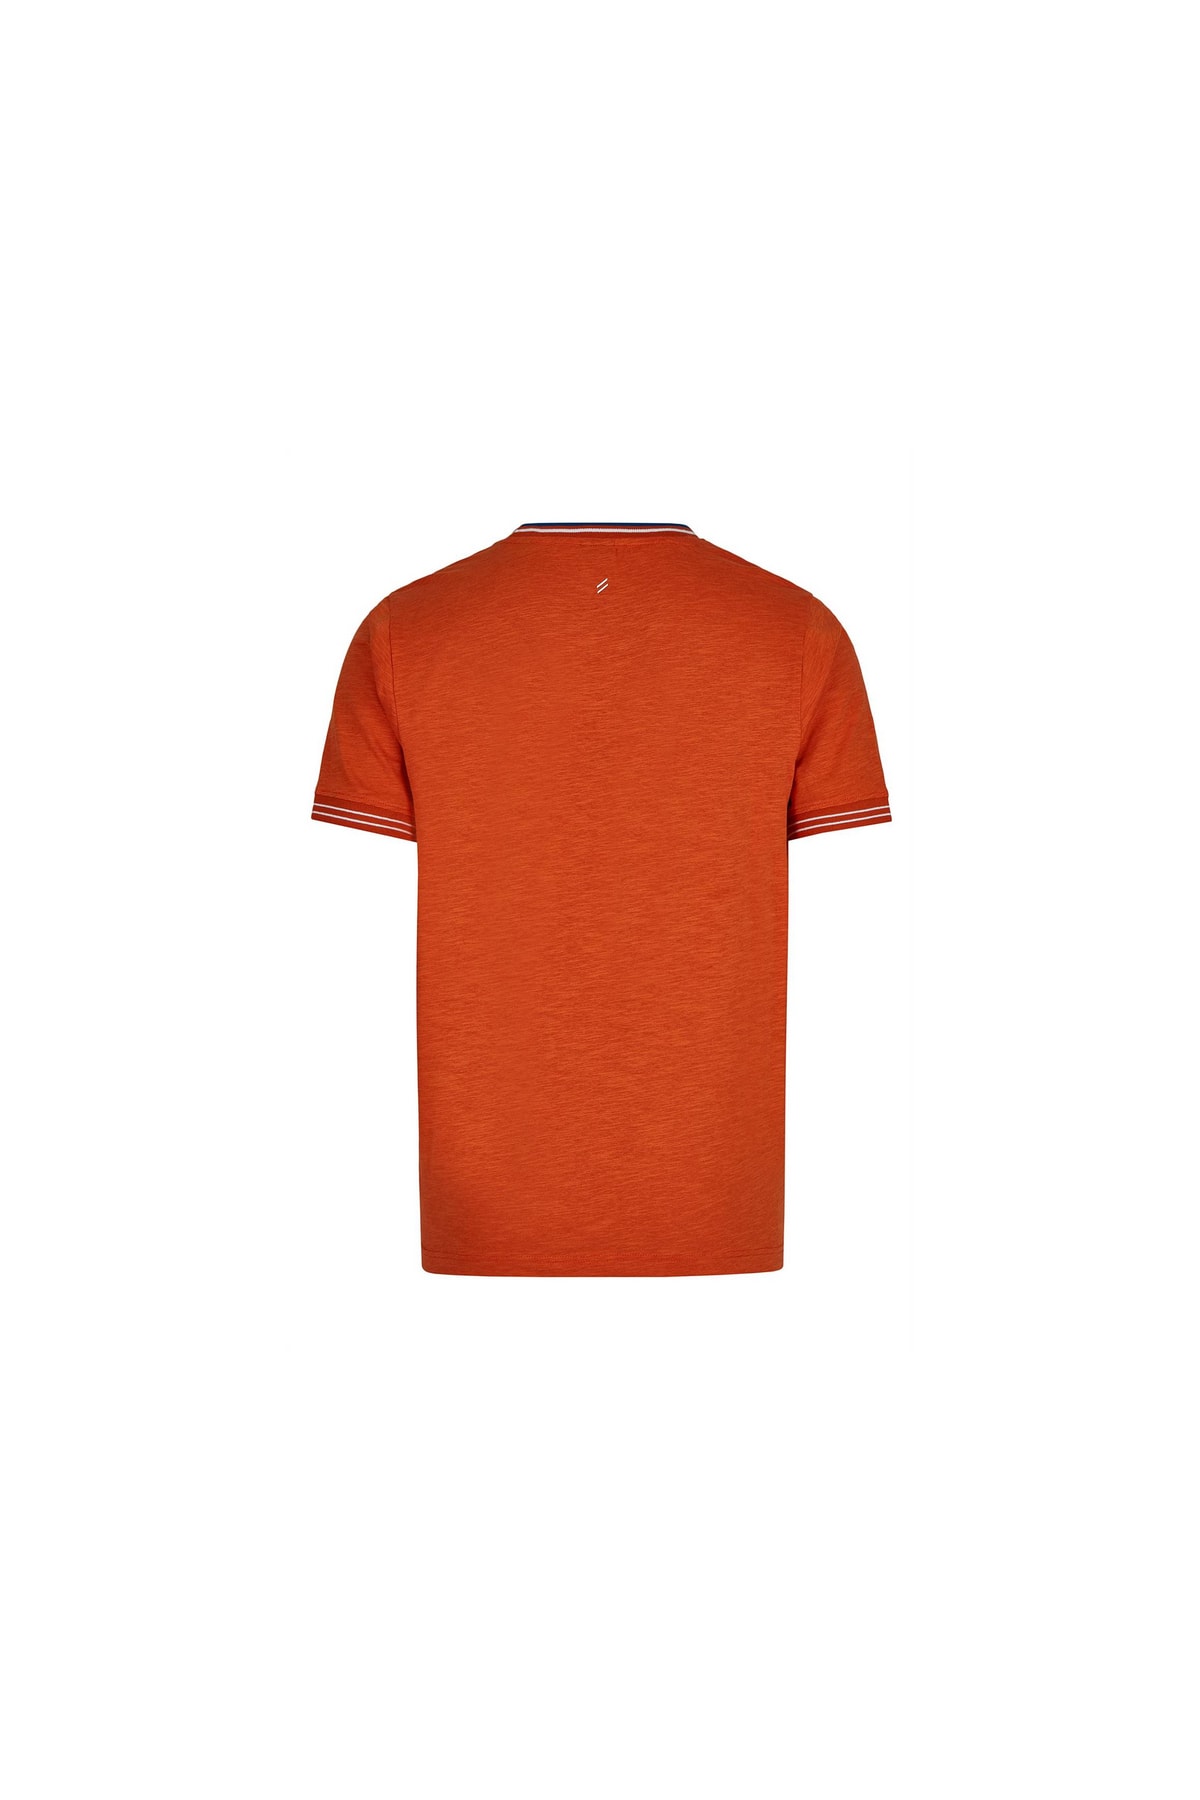 Daniel Hechter Hemd Orange Regular Fit Fast ausverkauft